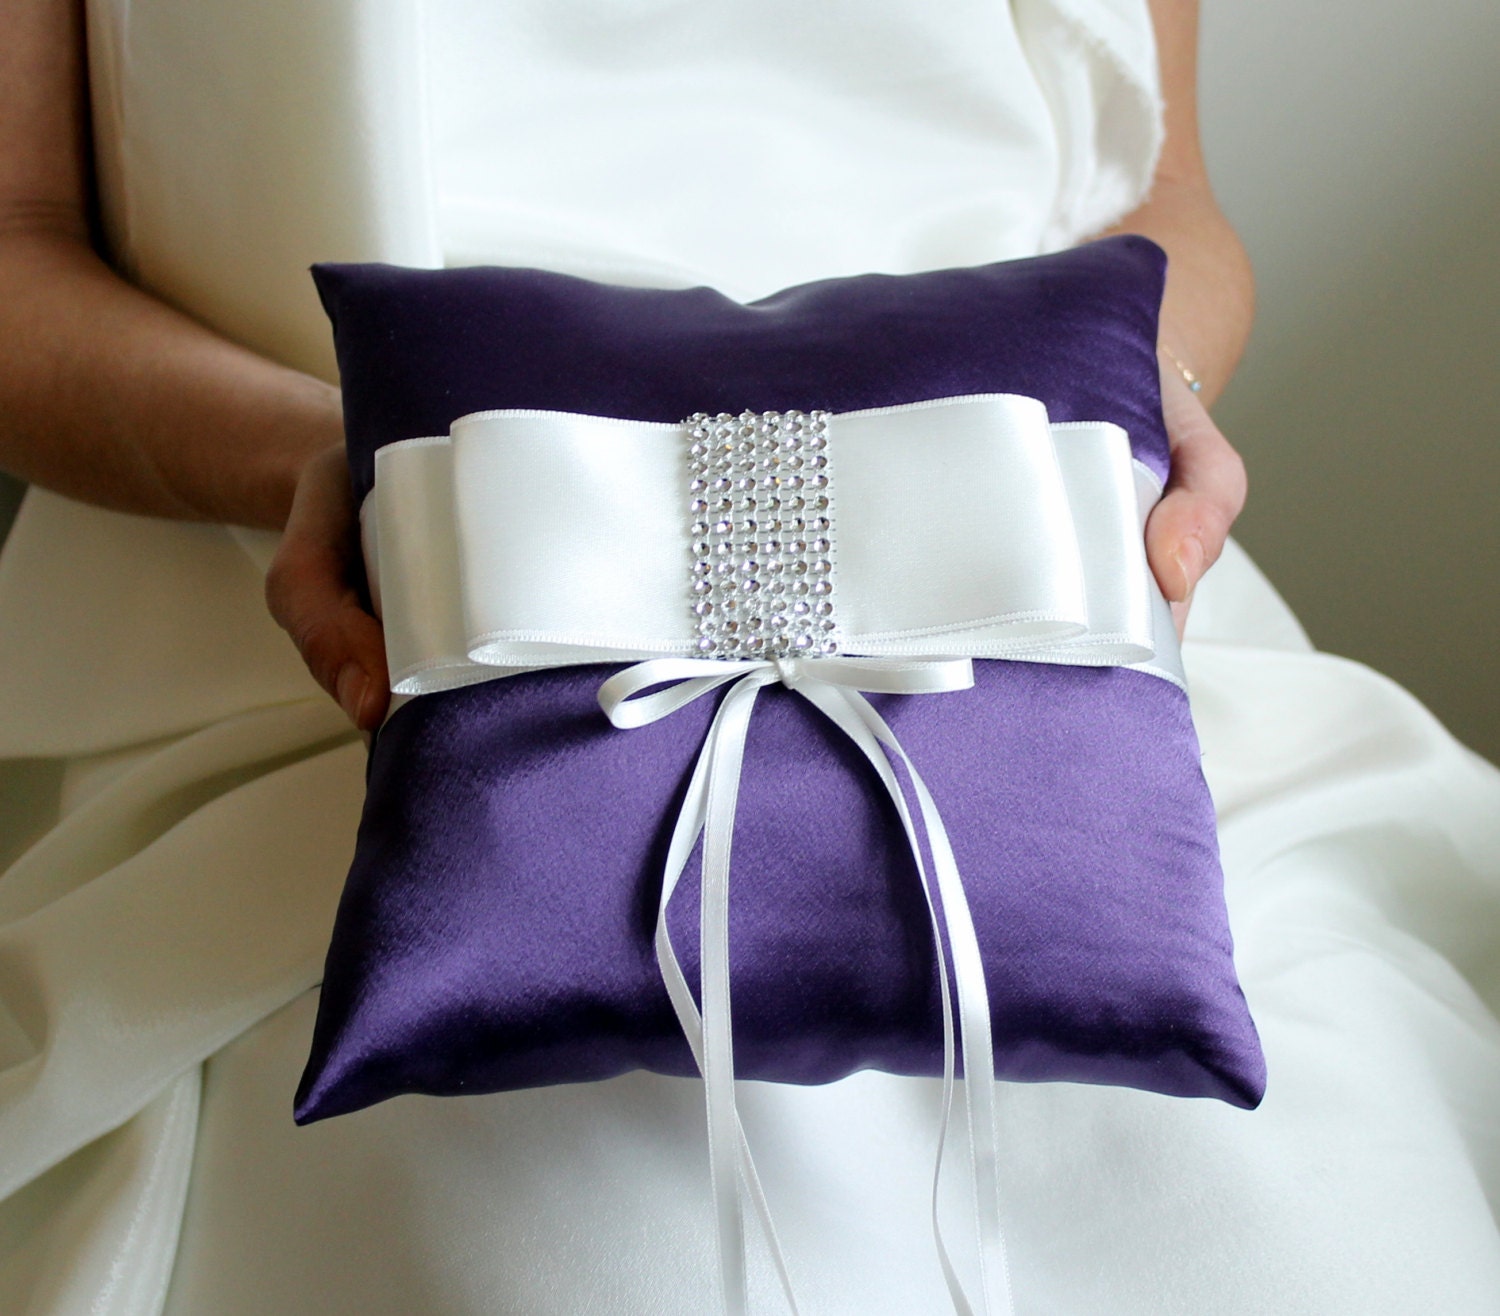 BIG OPENING SALE / Bridal Ring Bearer Pillow - Violet Purple white -Bridal / Bride / Marriage / engagement, wedding, anniversary